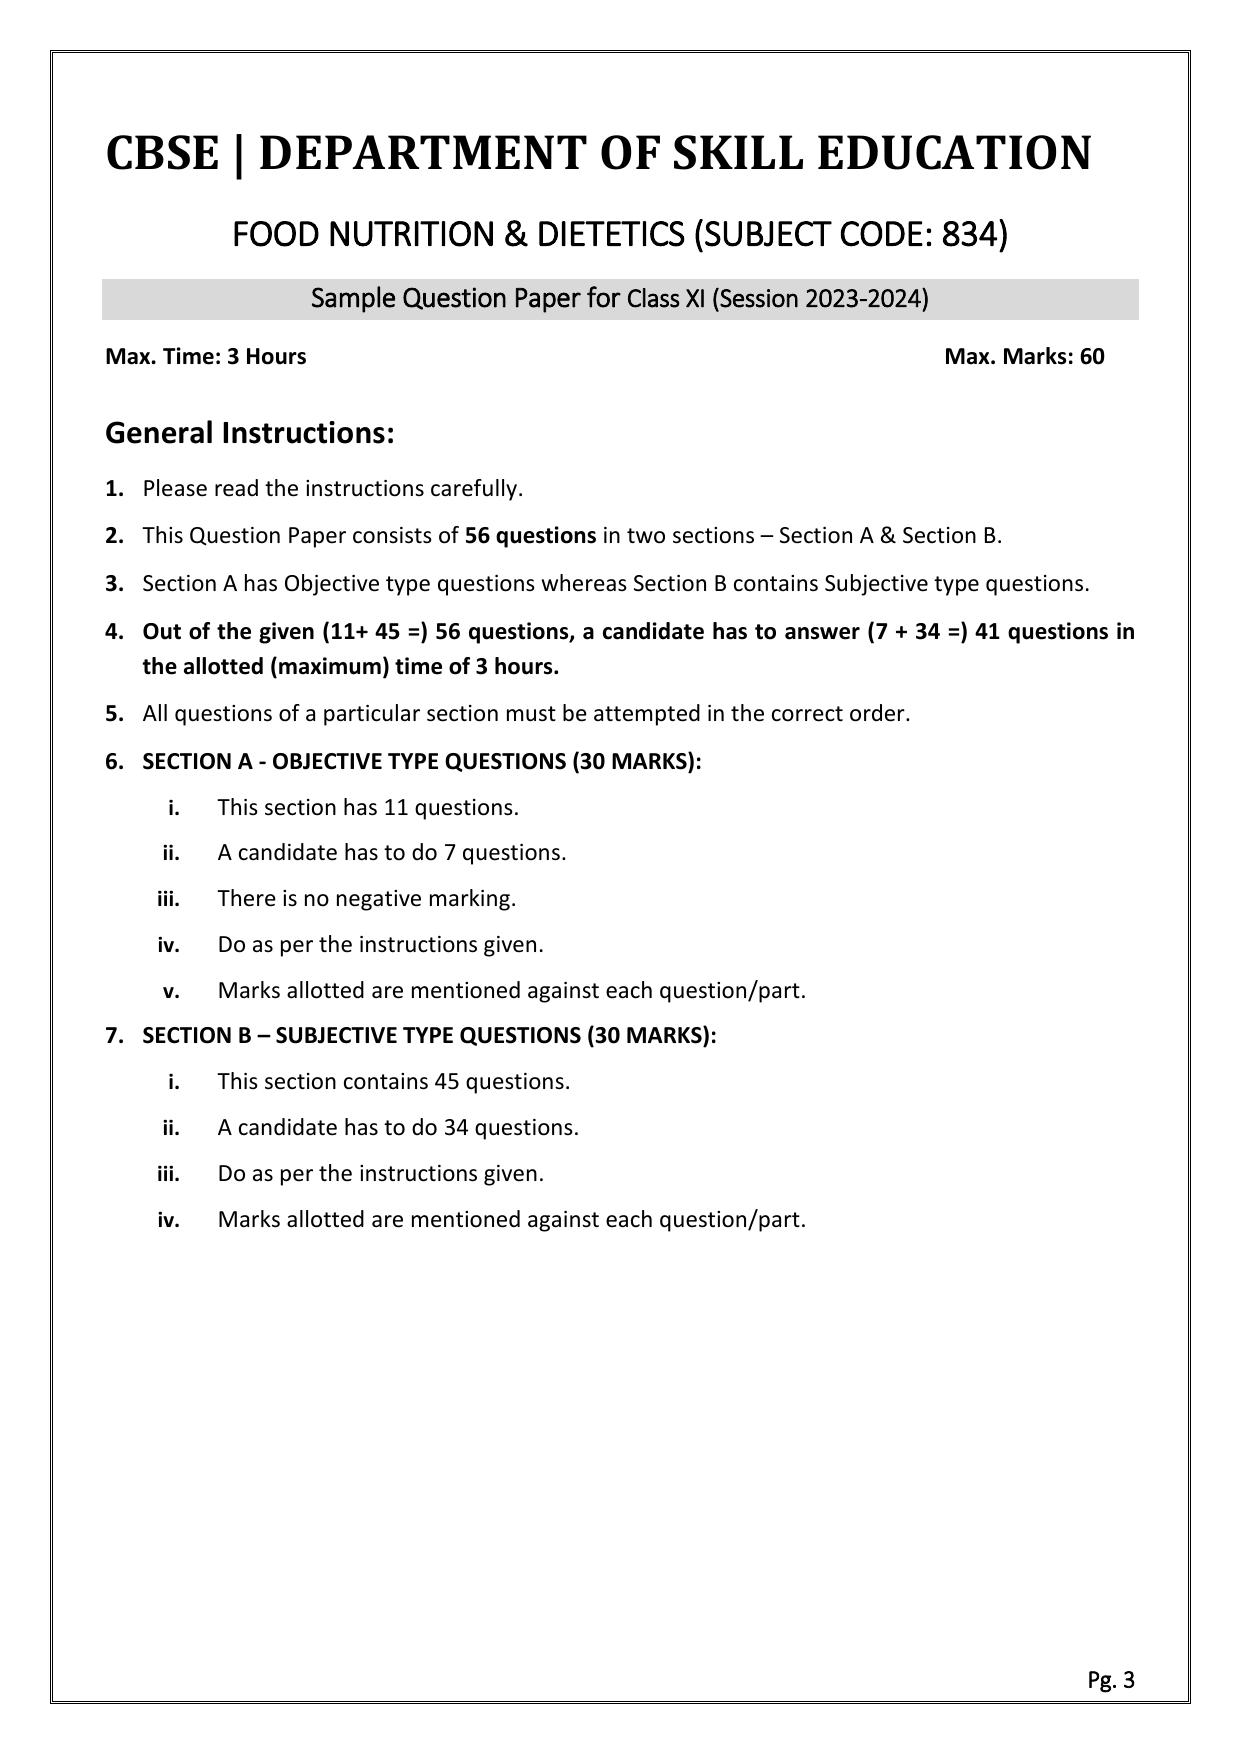 CBSE Class 11: FOOD NUTRITION & DIETETICS 2024 Sample Paper - Page 3